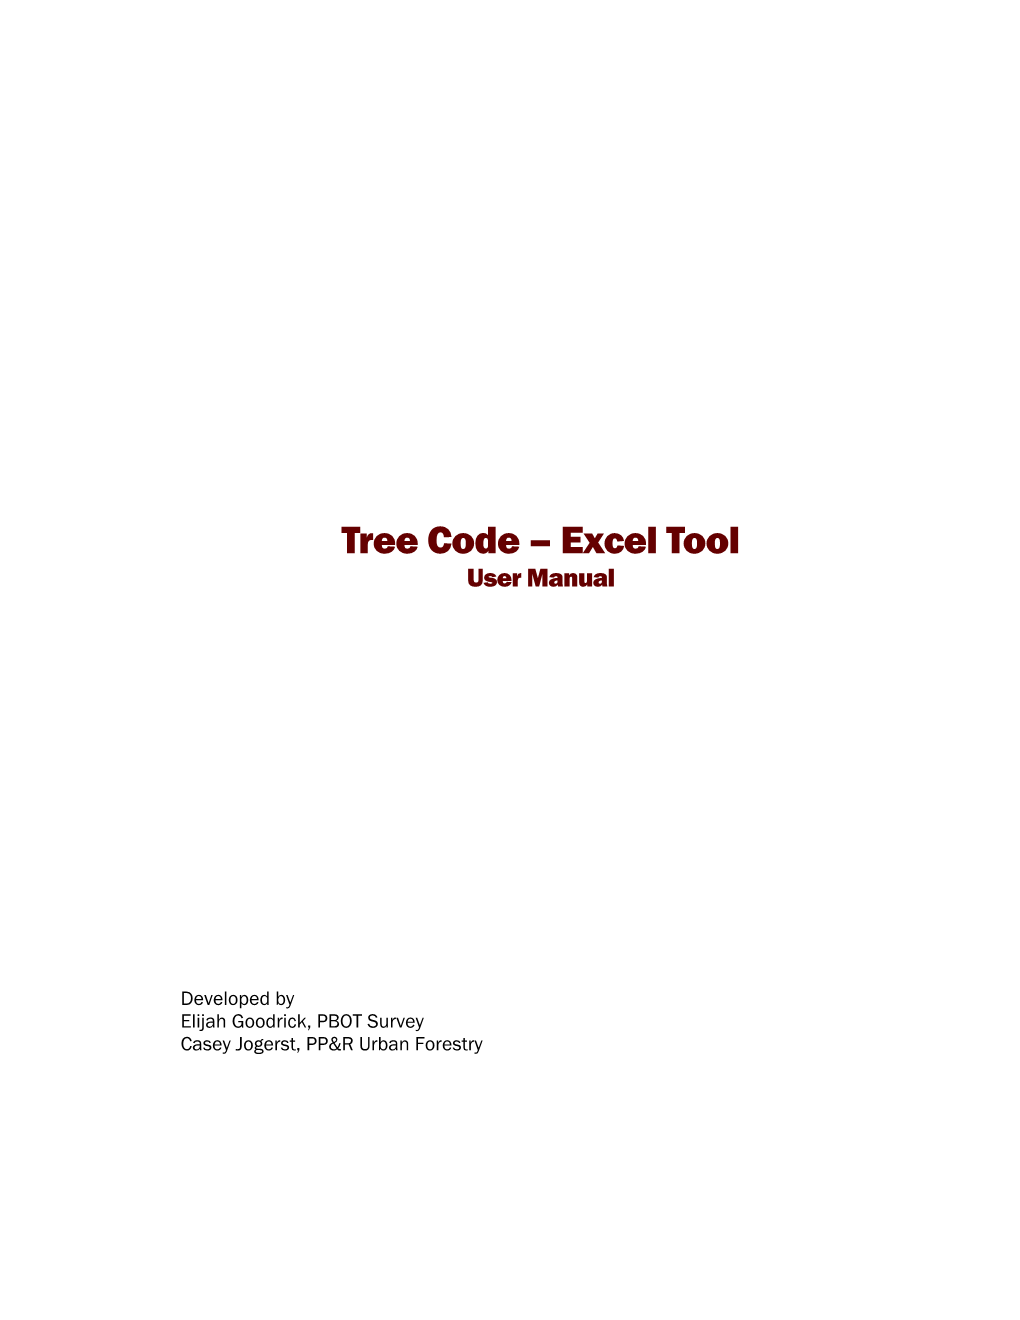 Tree Code – Excel Tool User Manual